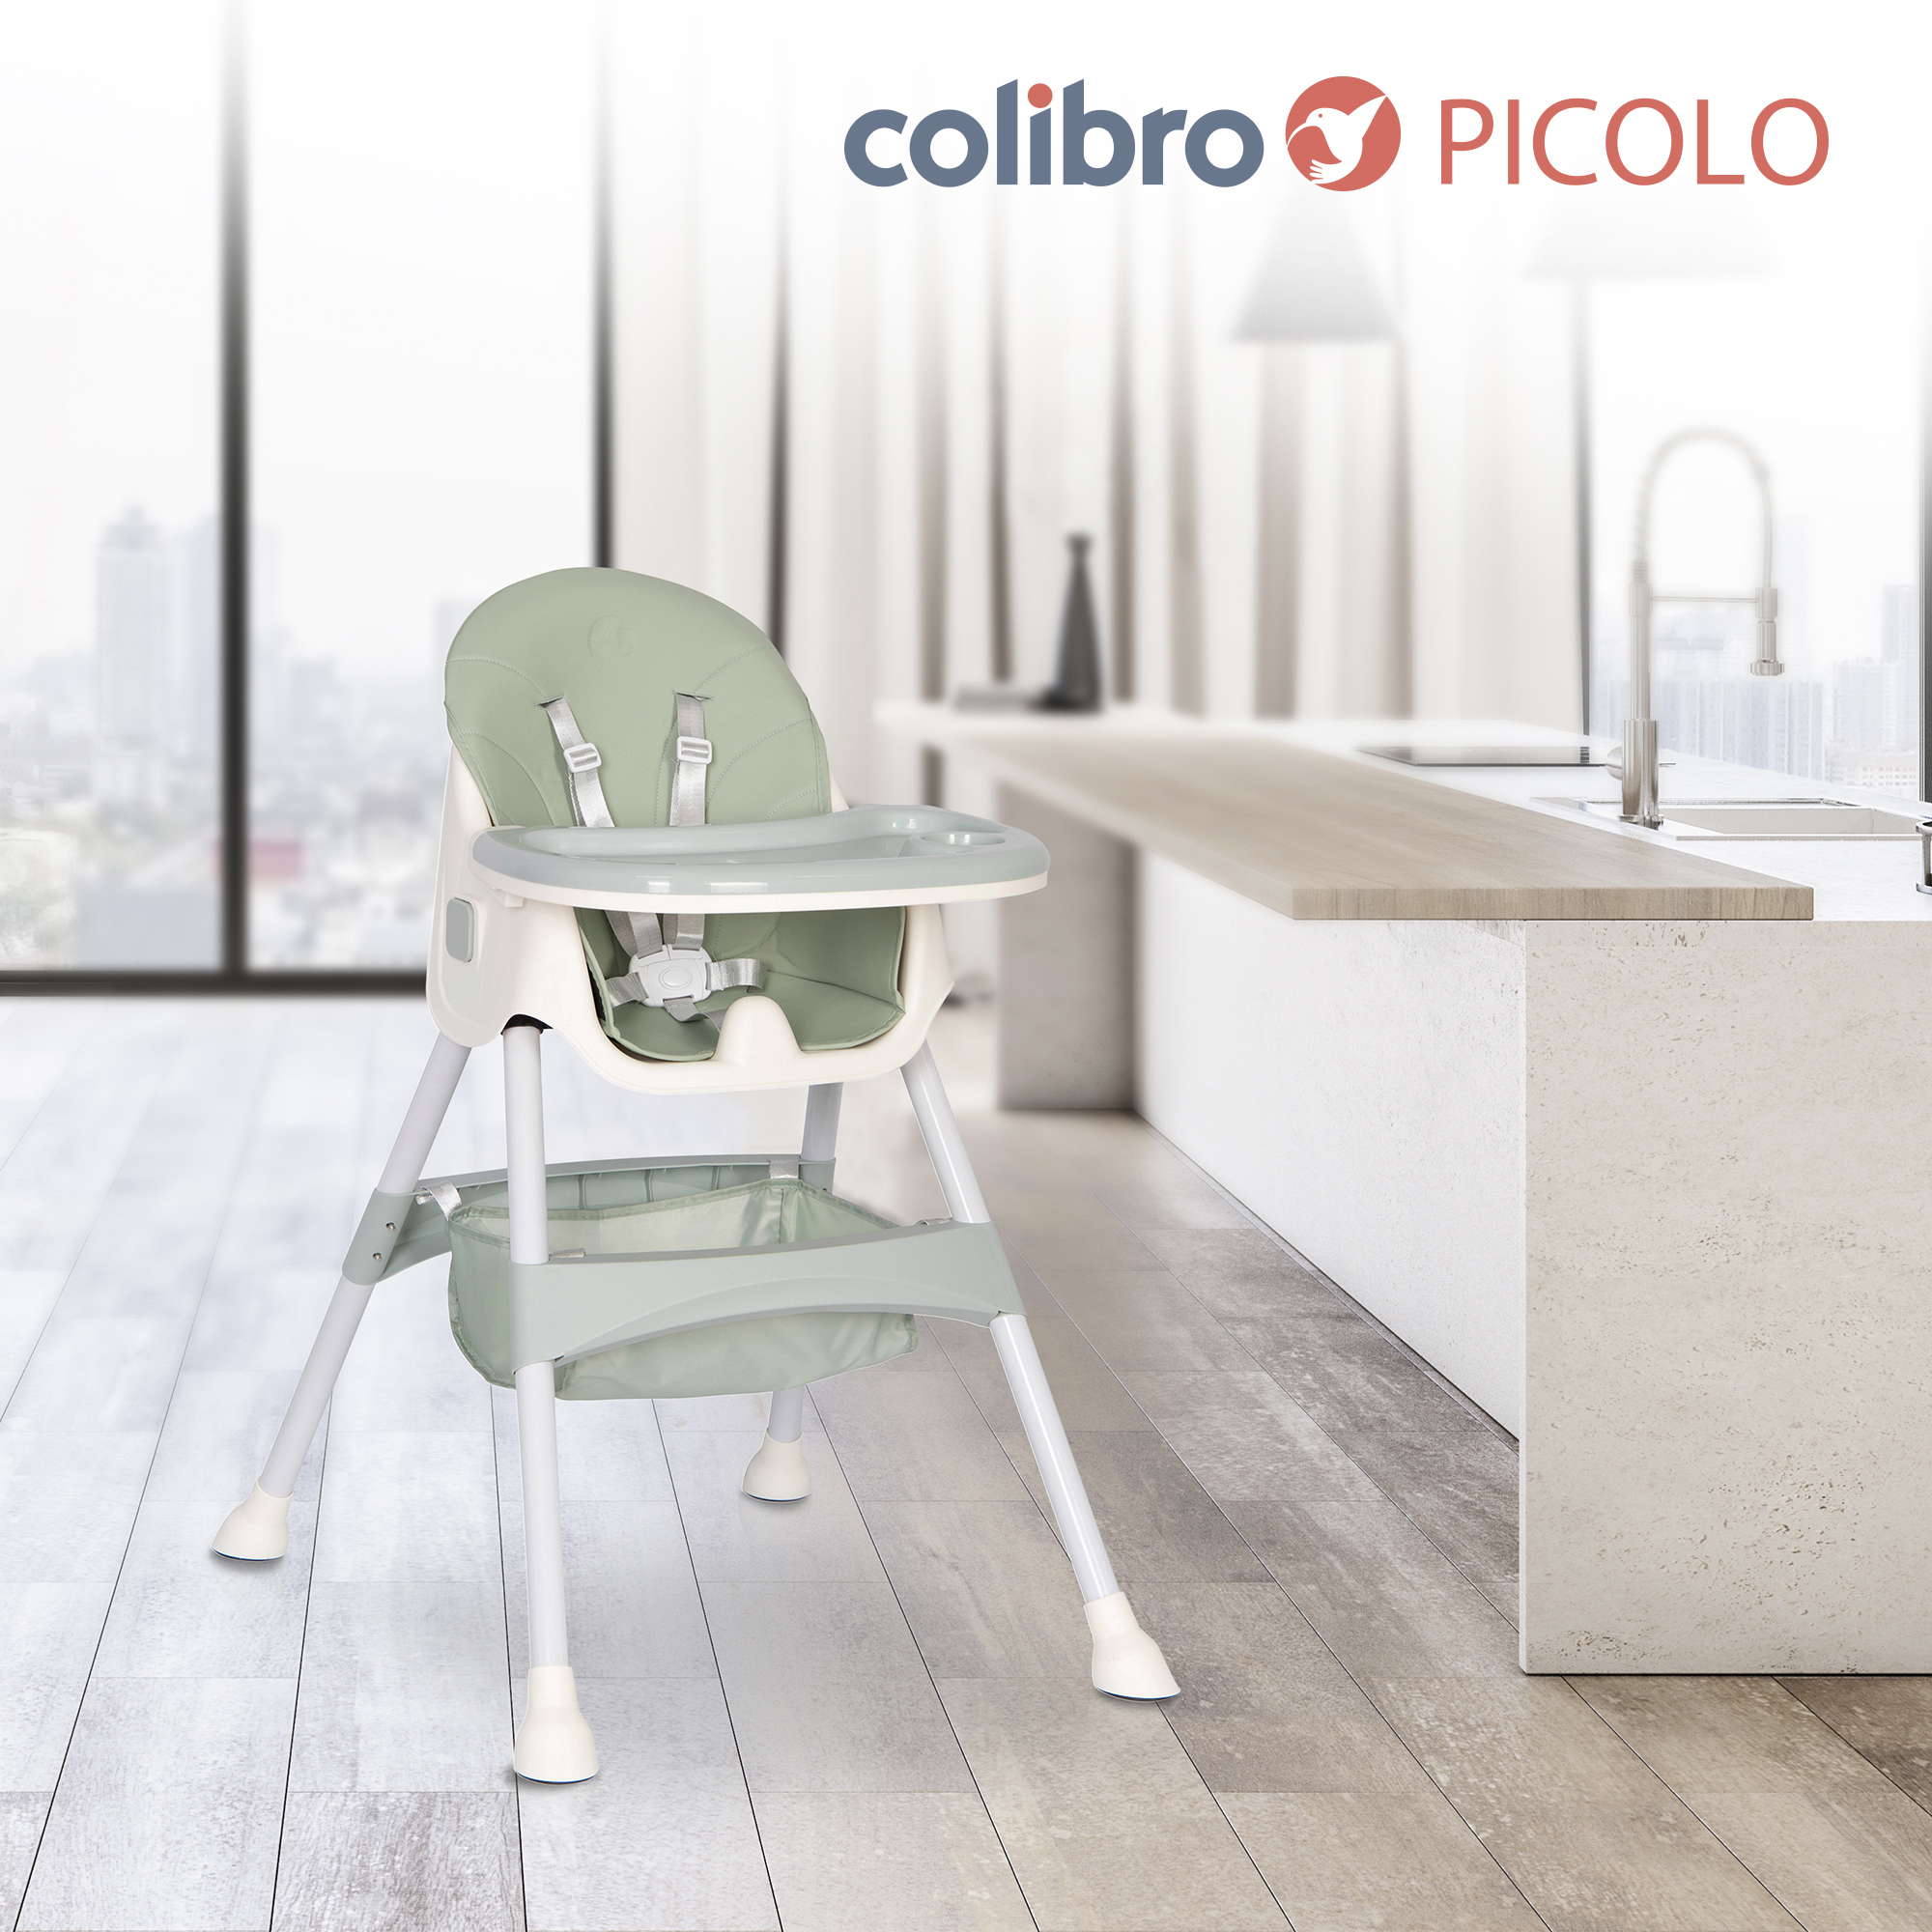 Krzesełko do karmienia dziecka Colibro Picolo